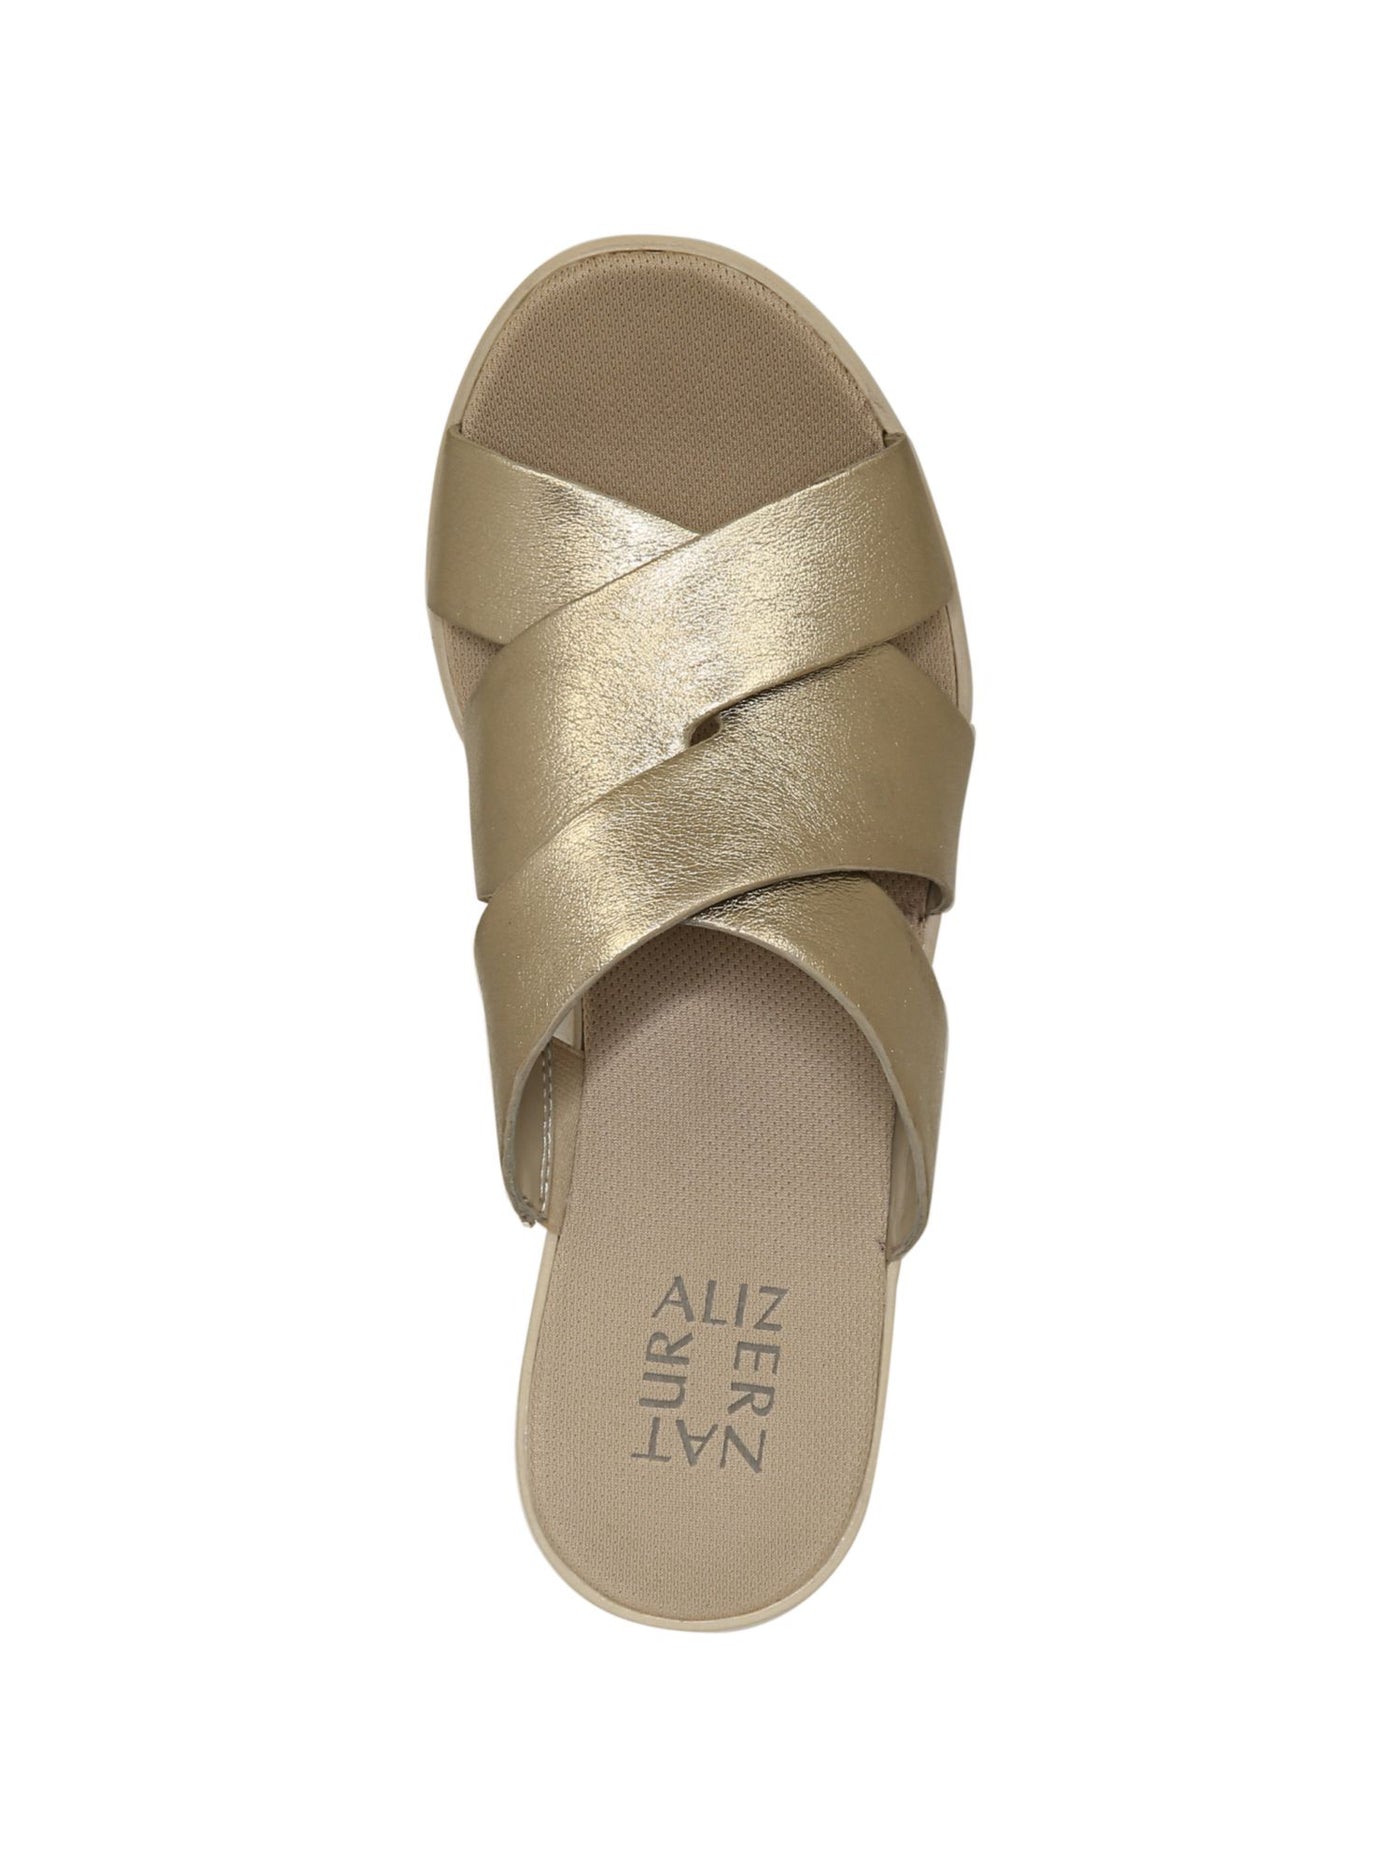 NATURALIZER Womens Gold Comfort Non-Slip Rowena Round Toe Wedge Slip On Leather Heeled Sandal 6.5 W